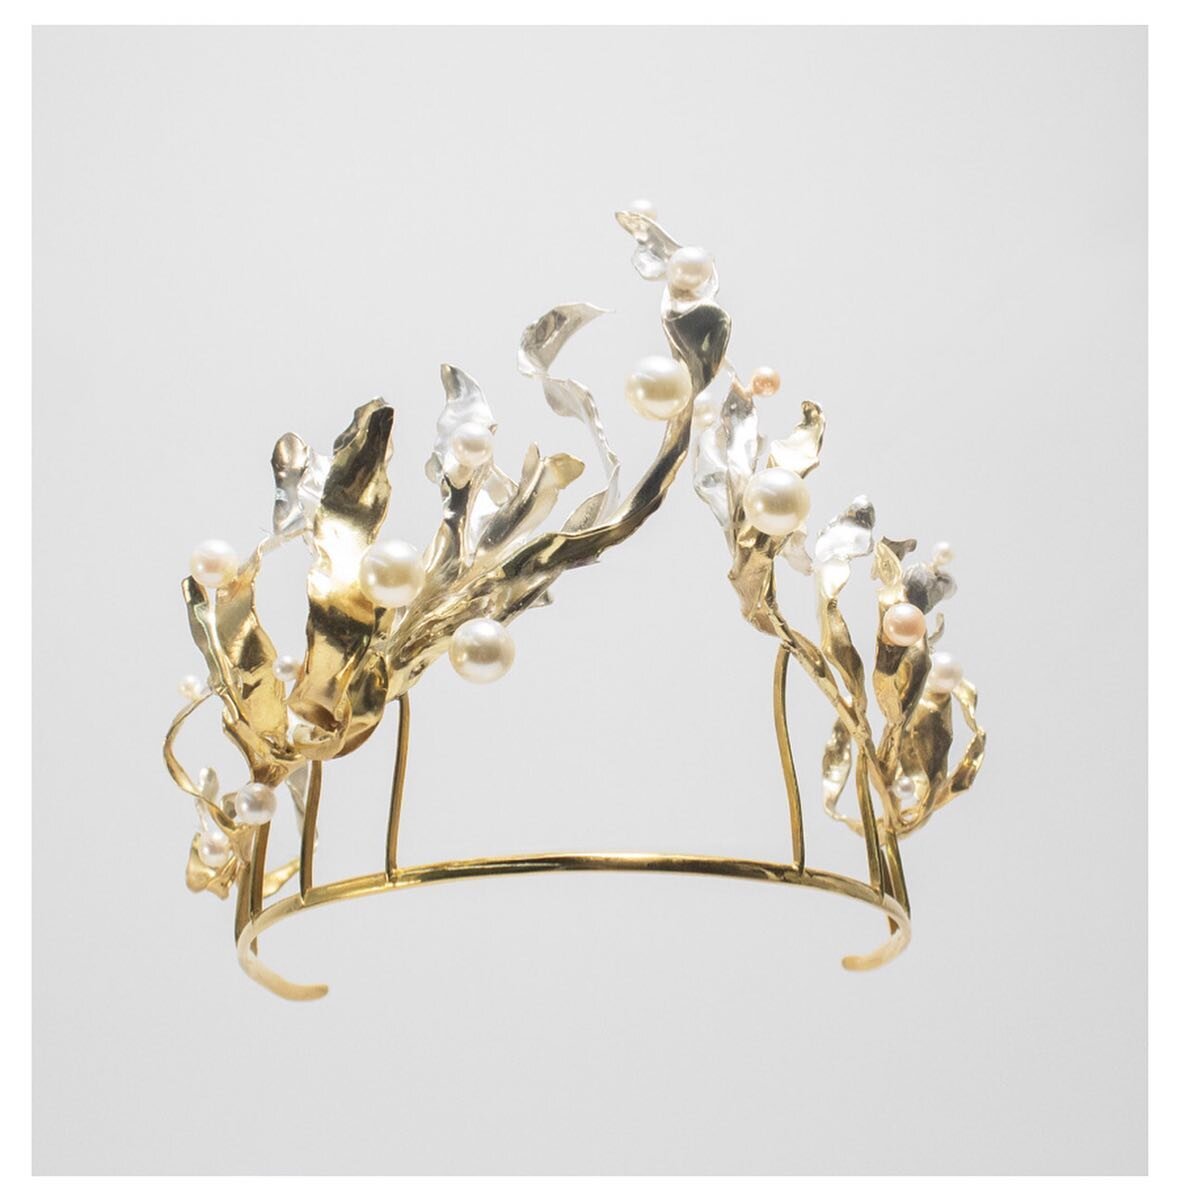 Die Tiara
.
.
.
.
.
#art #high #jewelry #haute #joaillerie #concept #design #nyjw